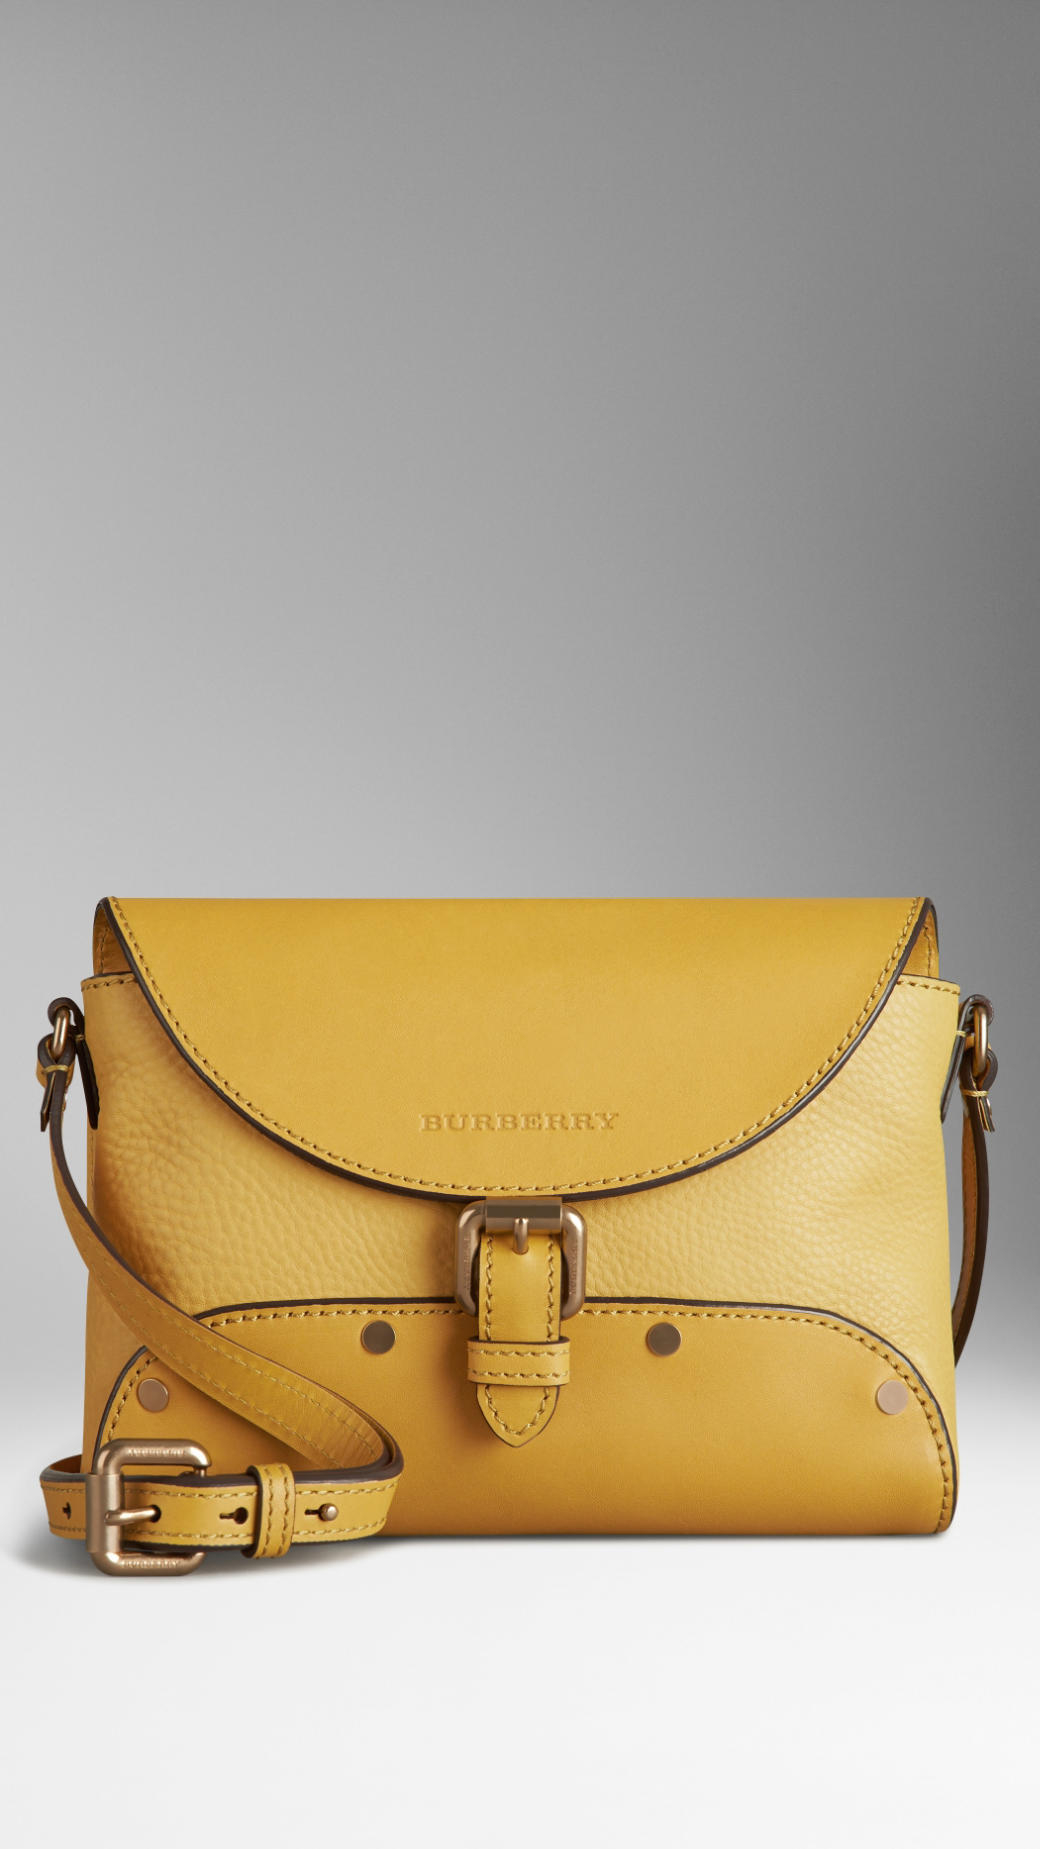 Burberry Flat Stud Detail Crossbody Bag in Yellow - Lyst